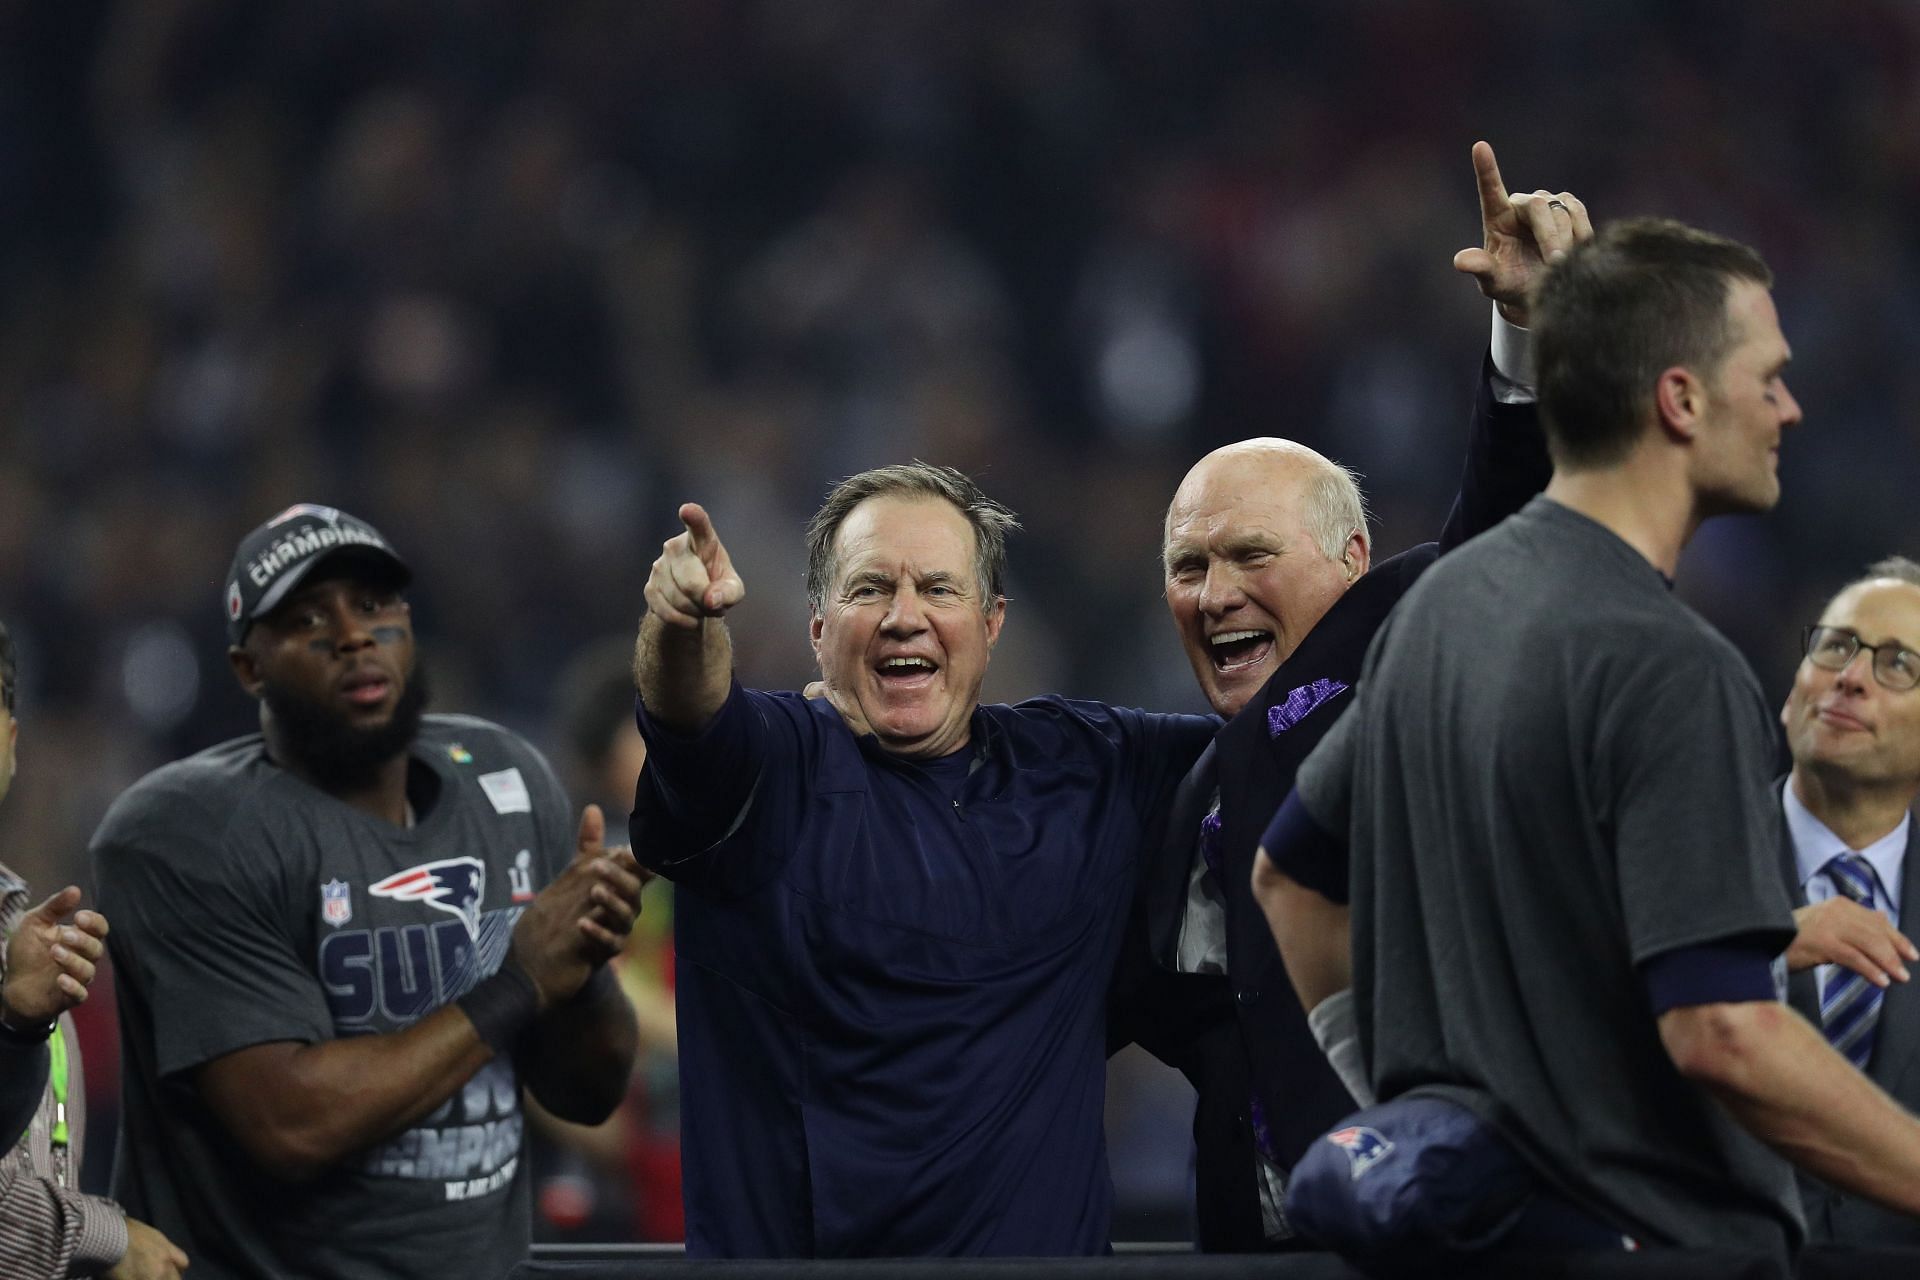 Bill Belichick after the Patriots won Super Bowl LI in February 2017